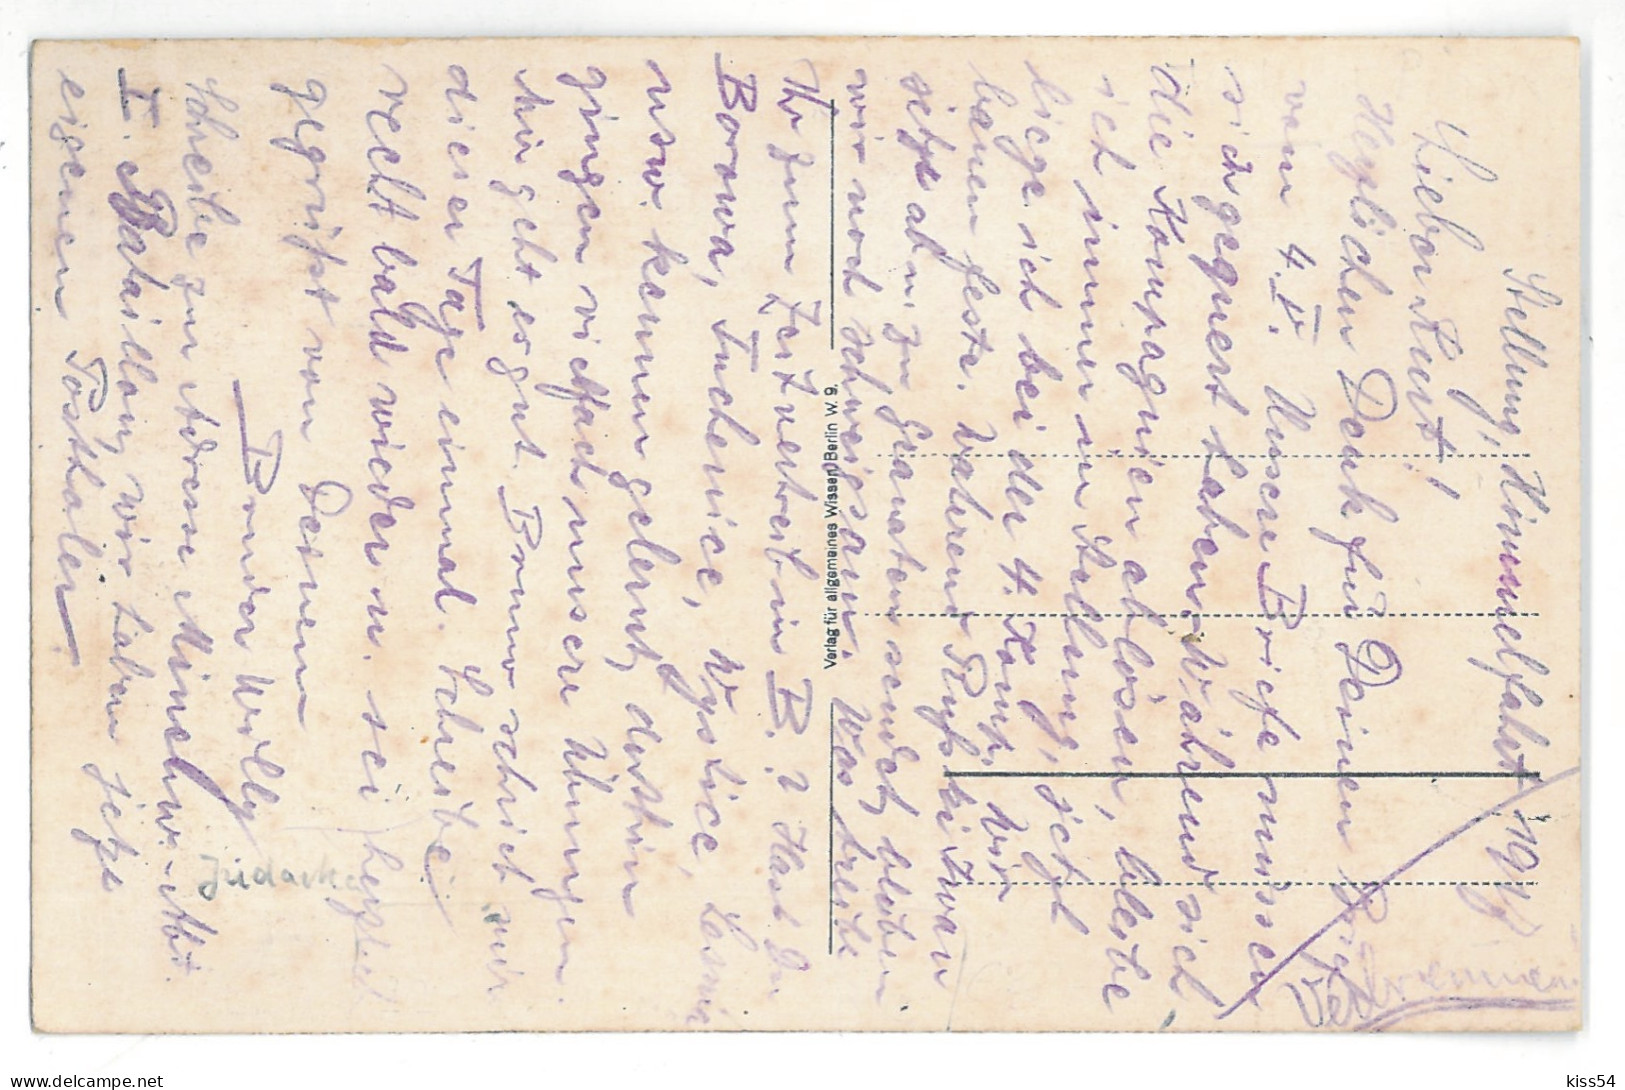 BL 40 - 15248 PINSK, House Of A Poor Jew, Belarus - Old Postcard - Used - 1917 - Belarus